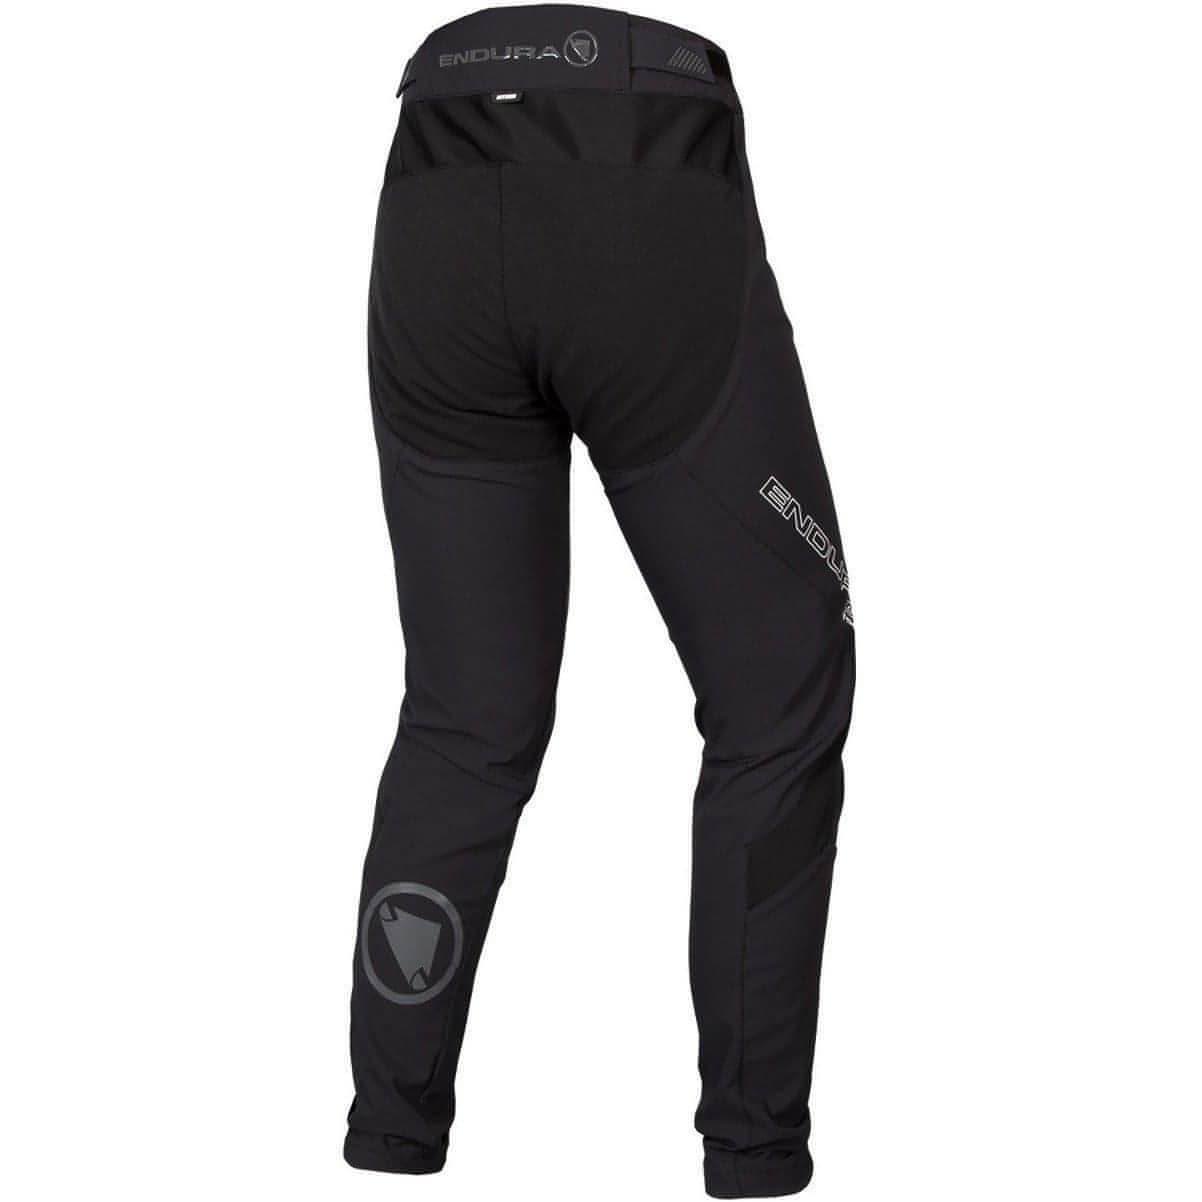 Endura Cycling Pants Womens L Black Meryl Knickers II Padded Leggings 3/4  Length | Pants for women, Cycling pants, Knickers